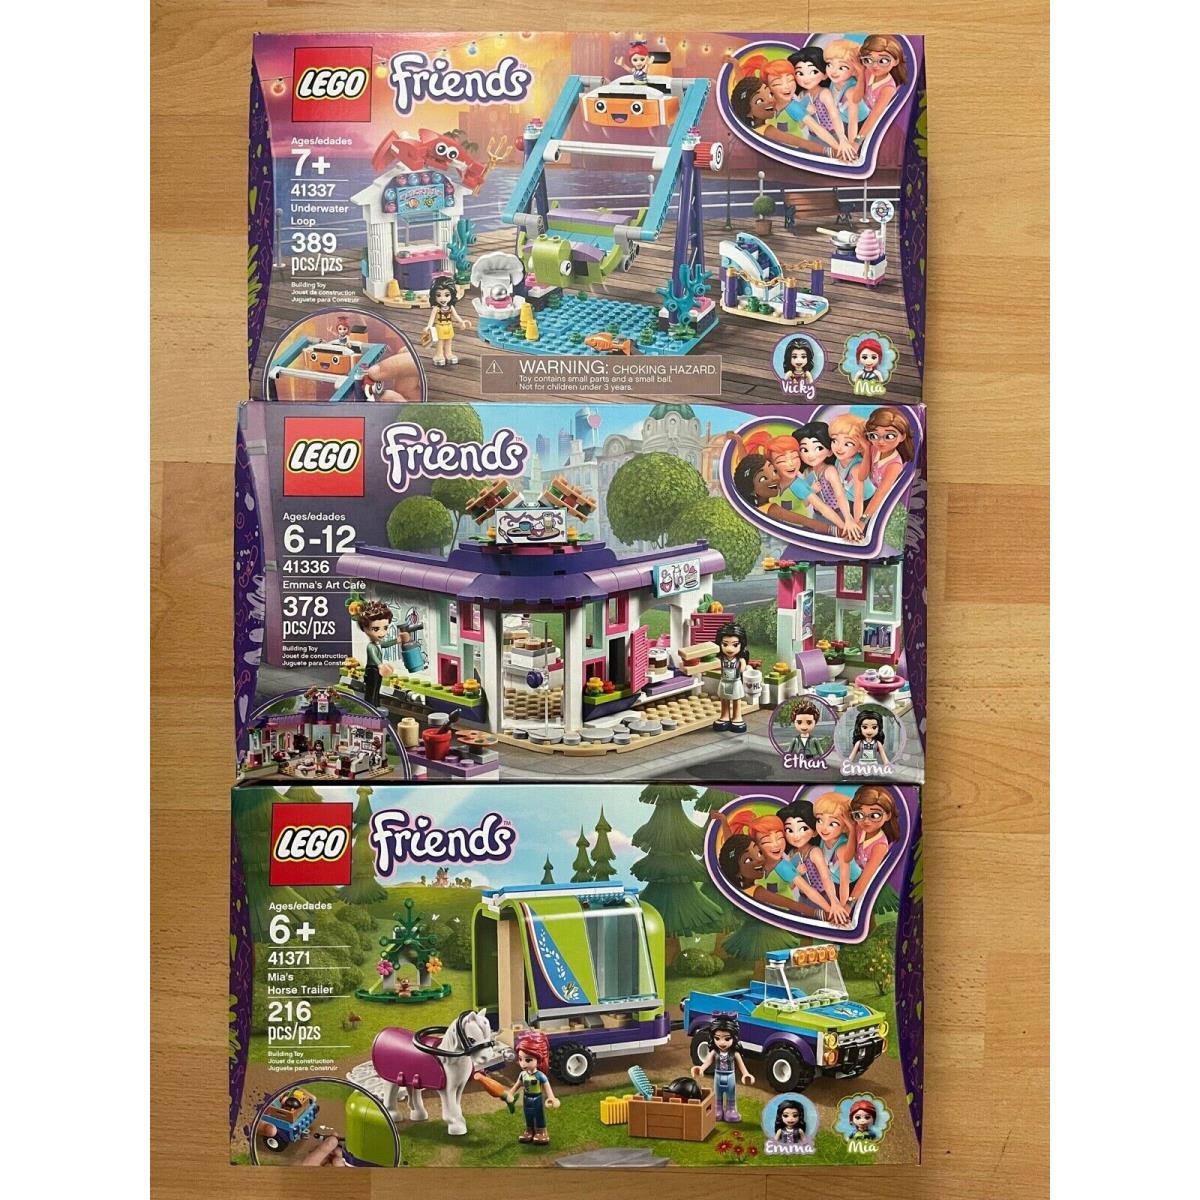 Lego Friends 3 Sets 41336 41337 41371 All w/ 983 Pcs 6 Minifigs